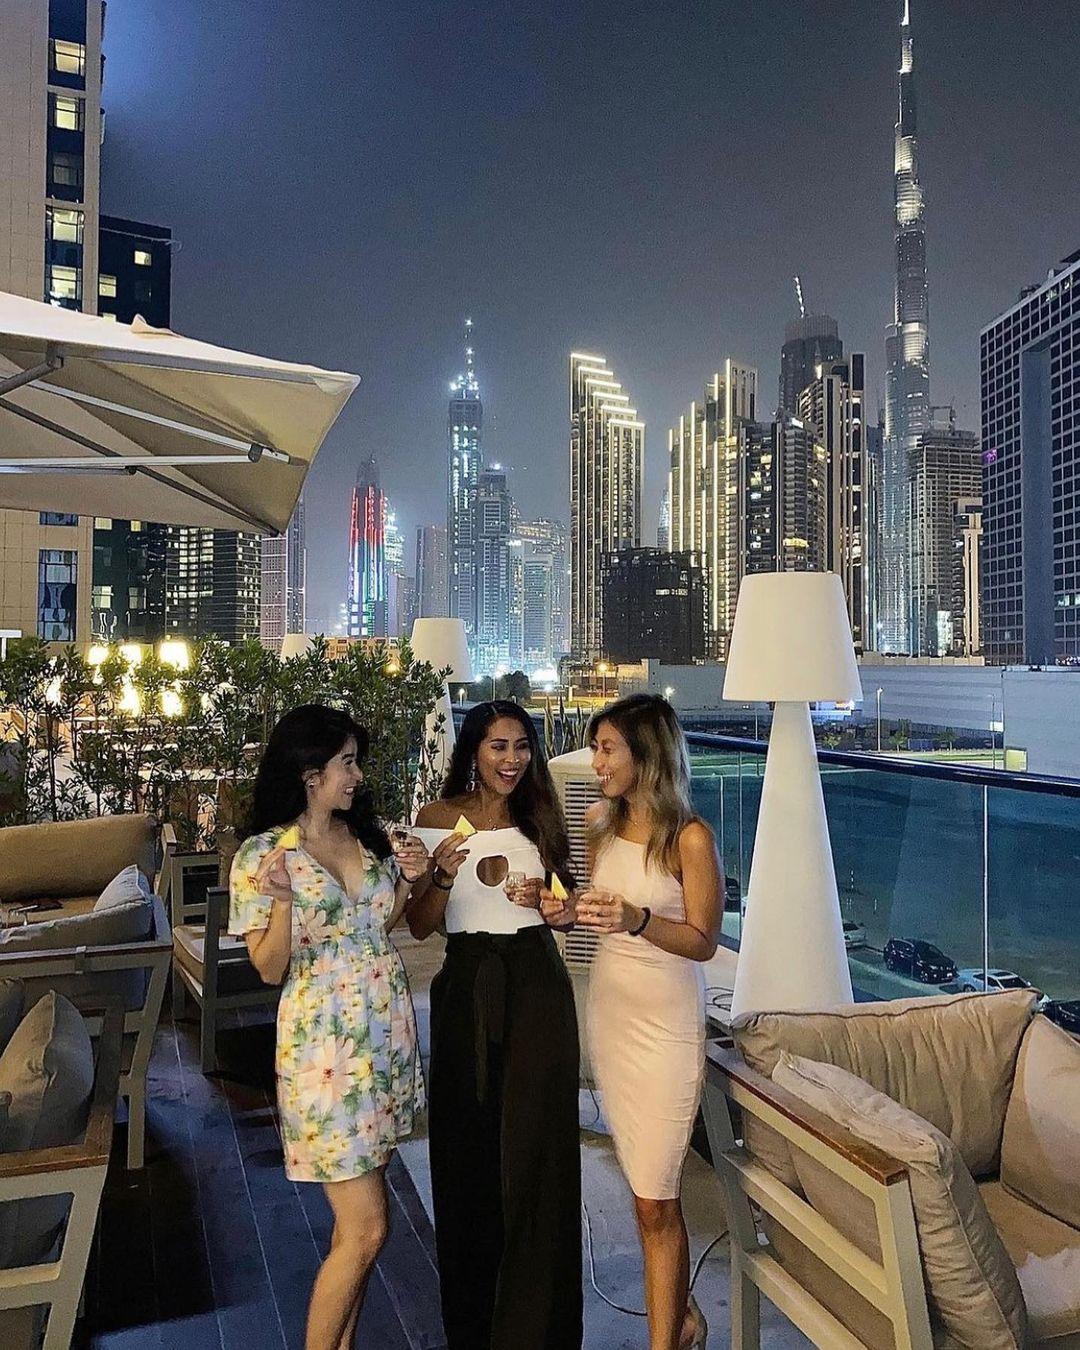 GRAB BRUNCH, BURGERS & A COOL LADIES NIGHT AT THIS DUBAI HOTSPOT